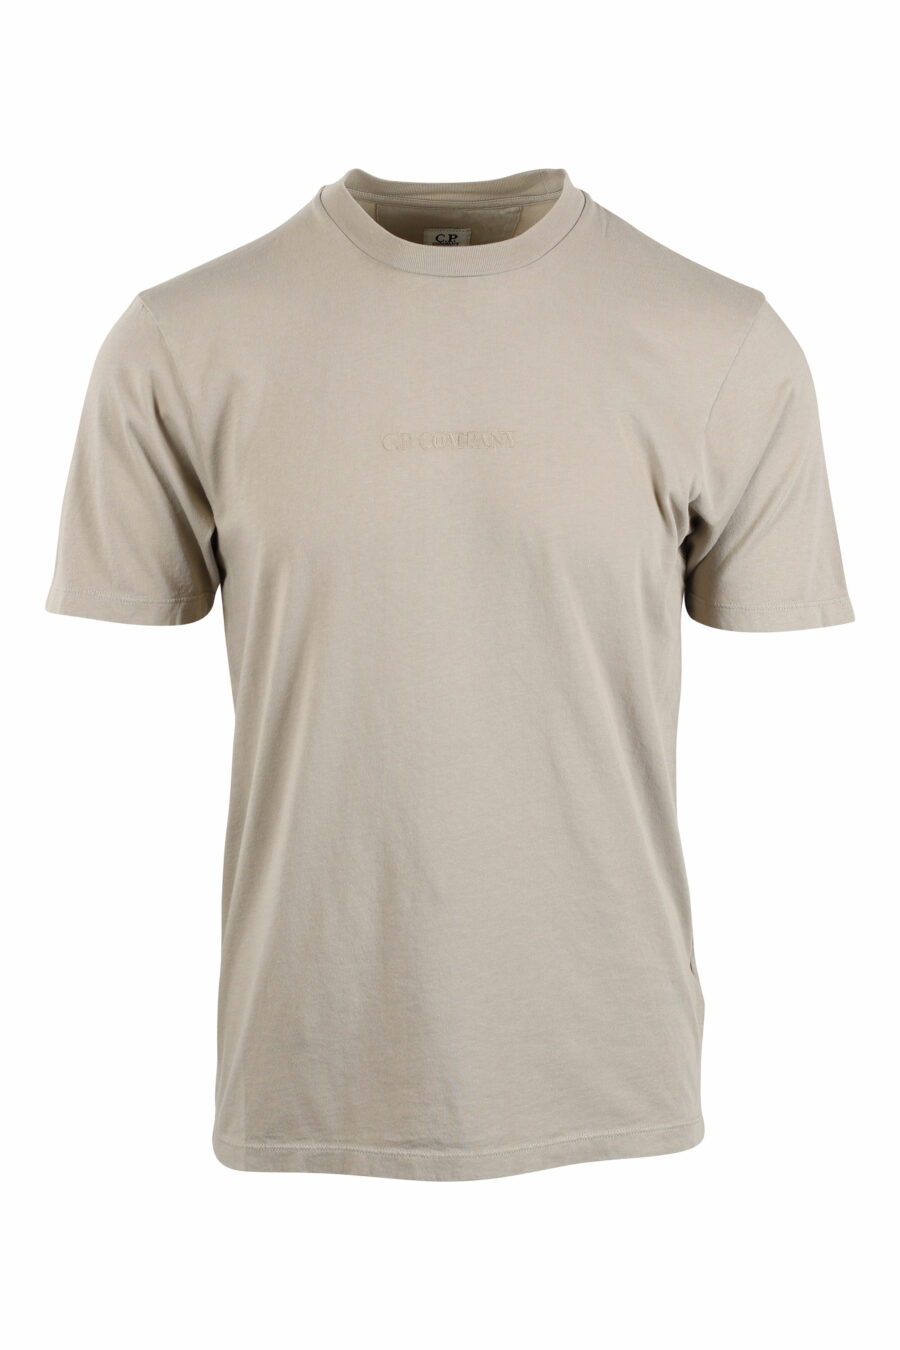 Camiseta beige con minilogo bordado - IMG 2627